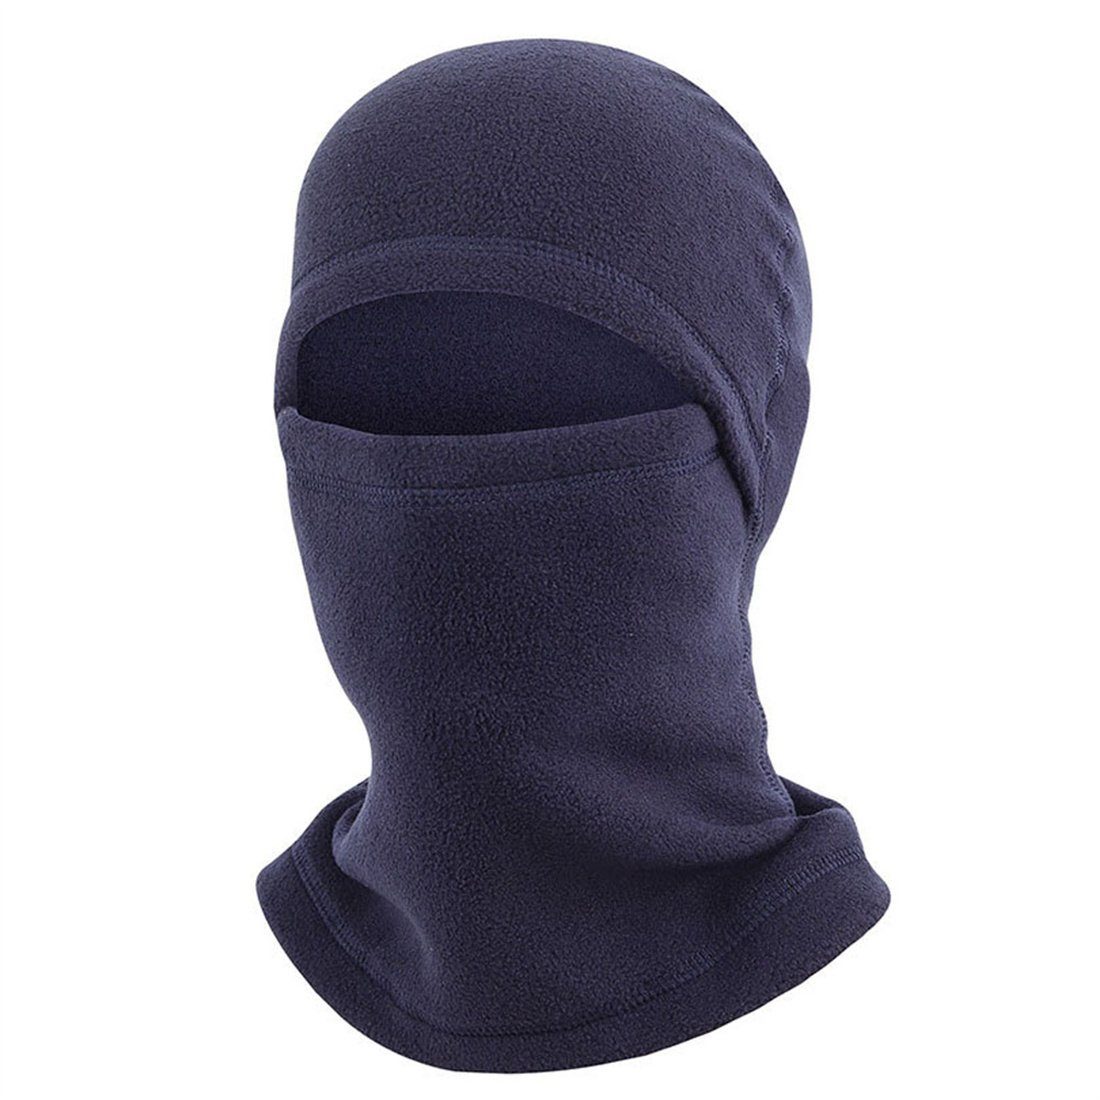 DÖRÖY Sturmhaube Winter Reiten Warme Maske,Multifunktionale Coldproof Ski Kopfbedeckung blau